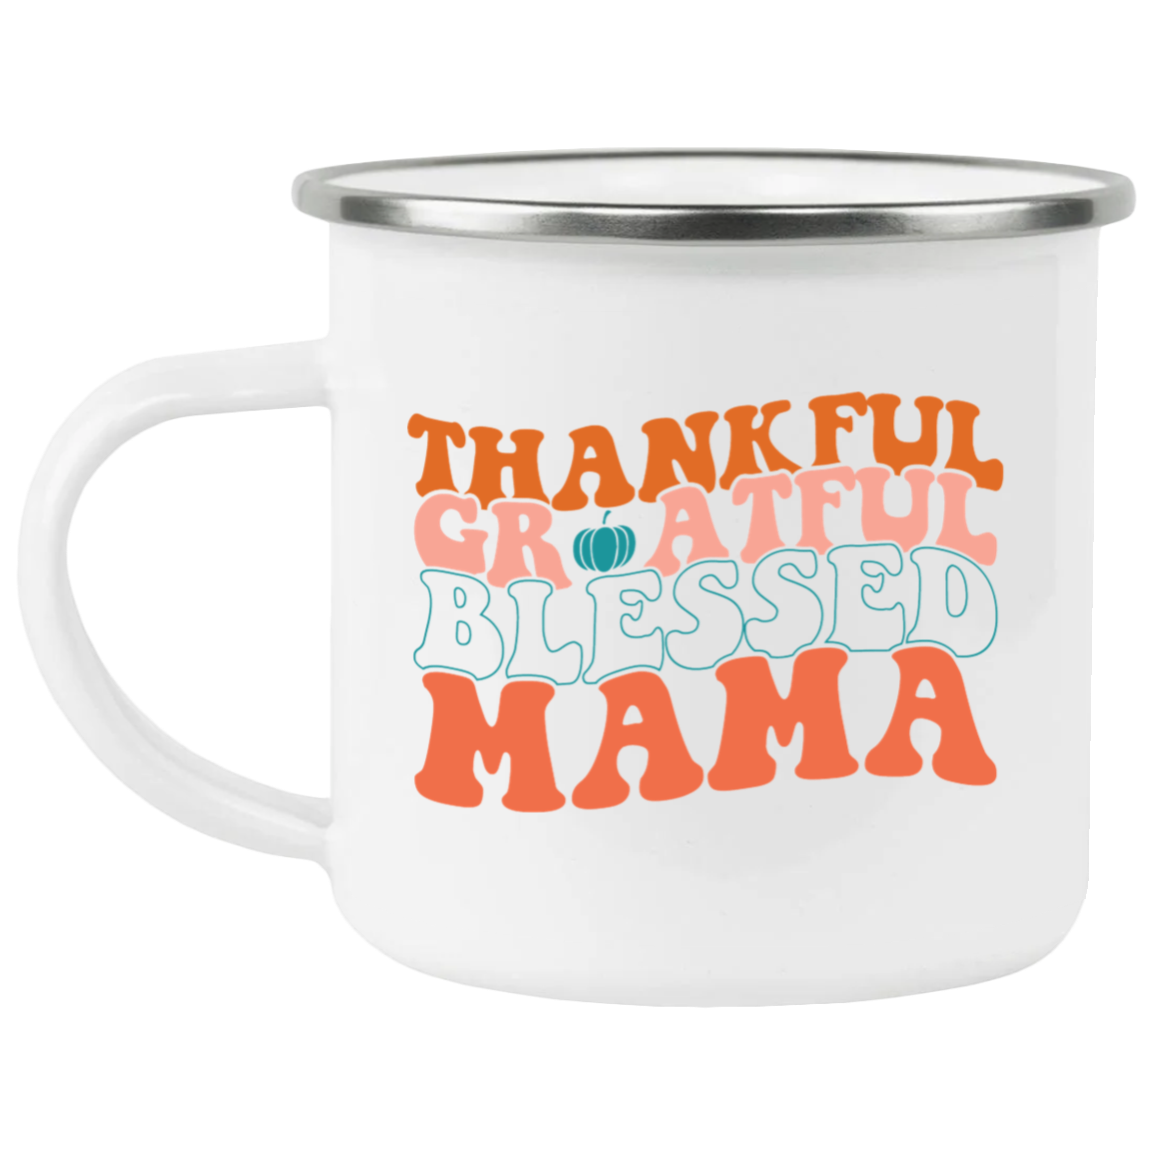 Thankful Grateful Blessed Mama Mug